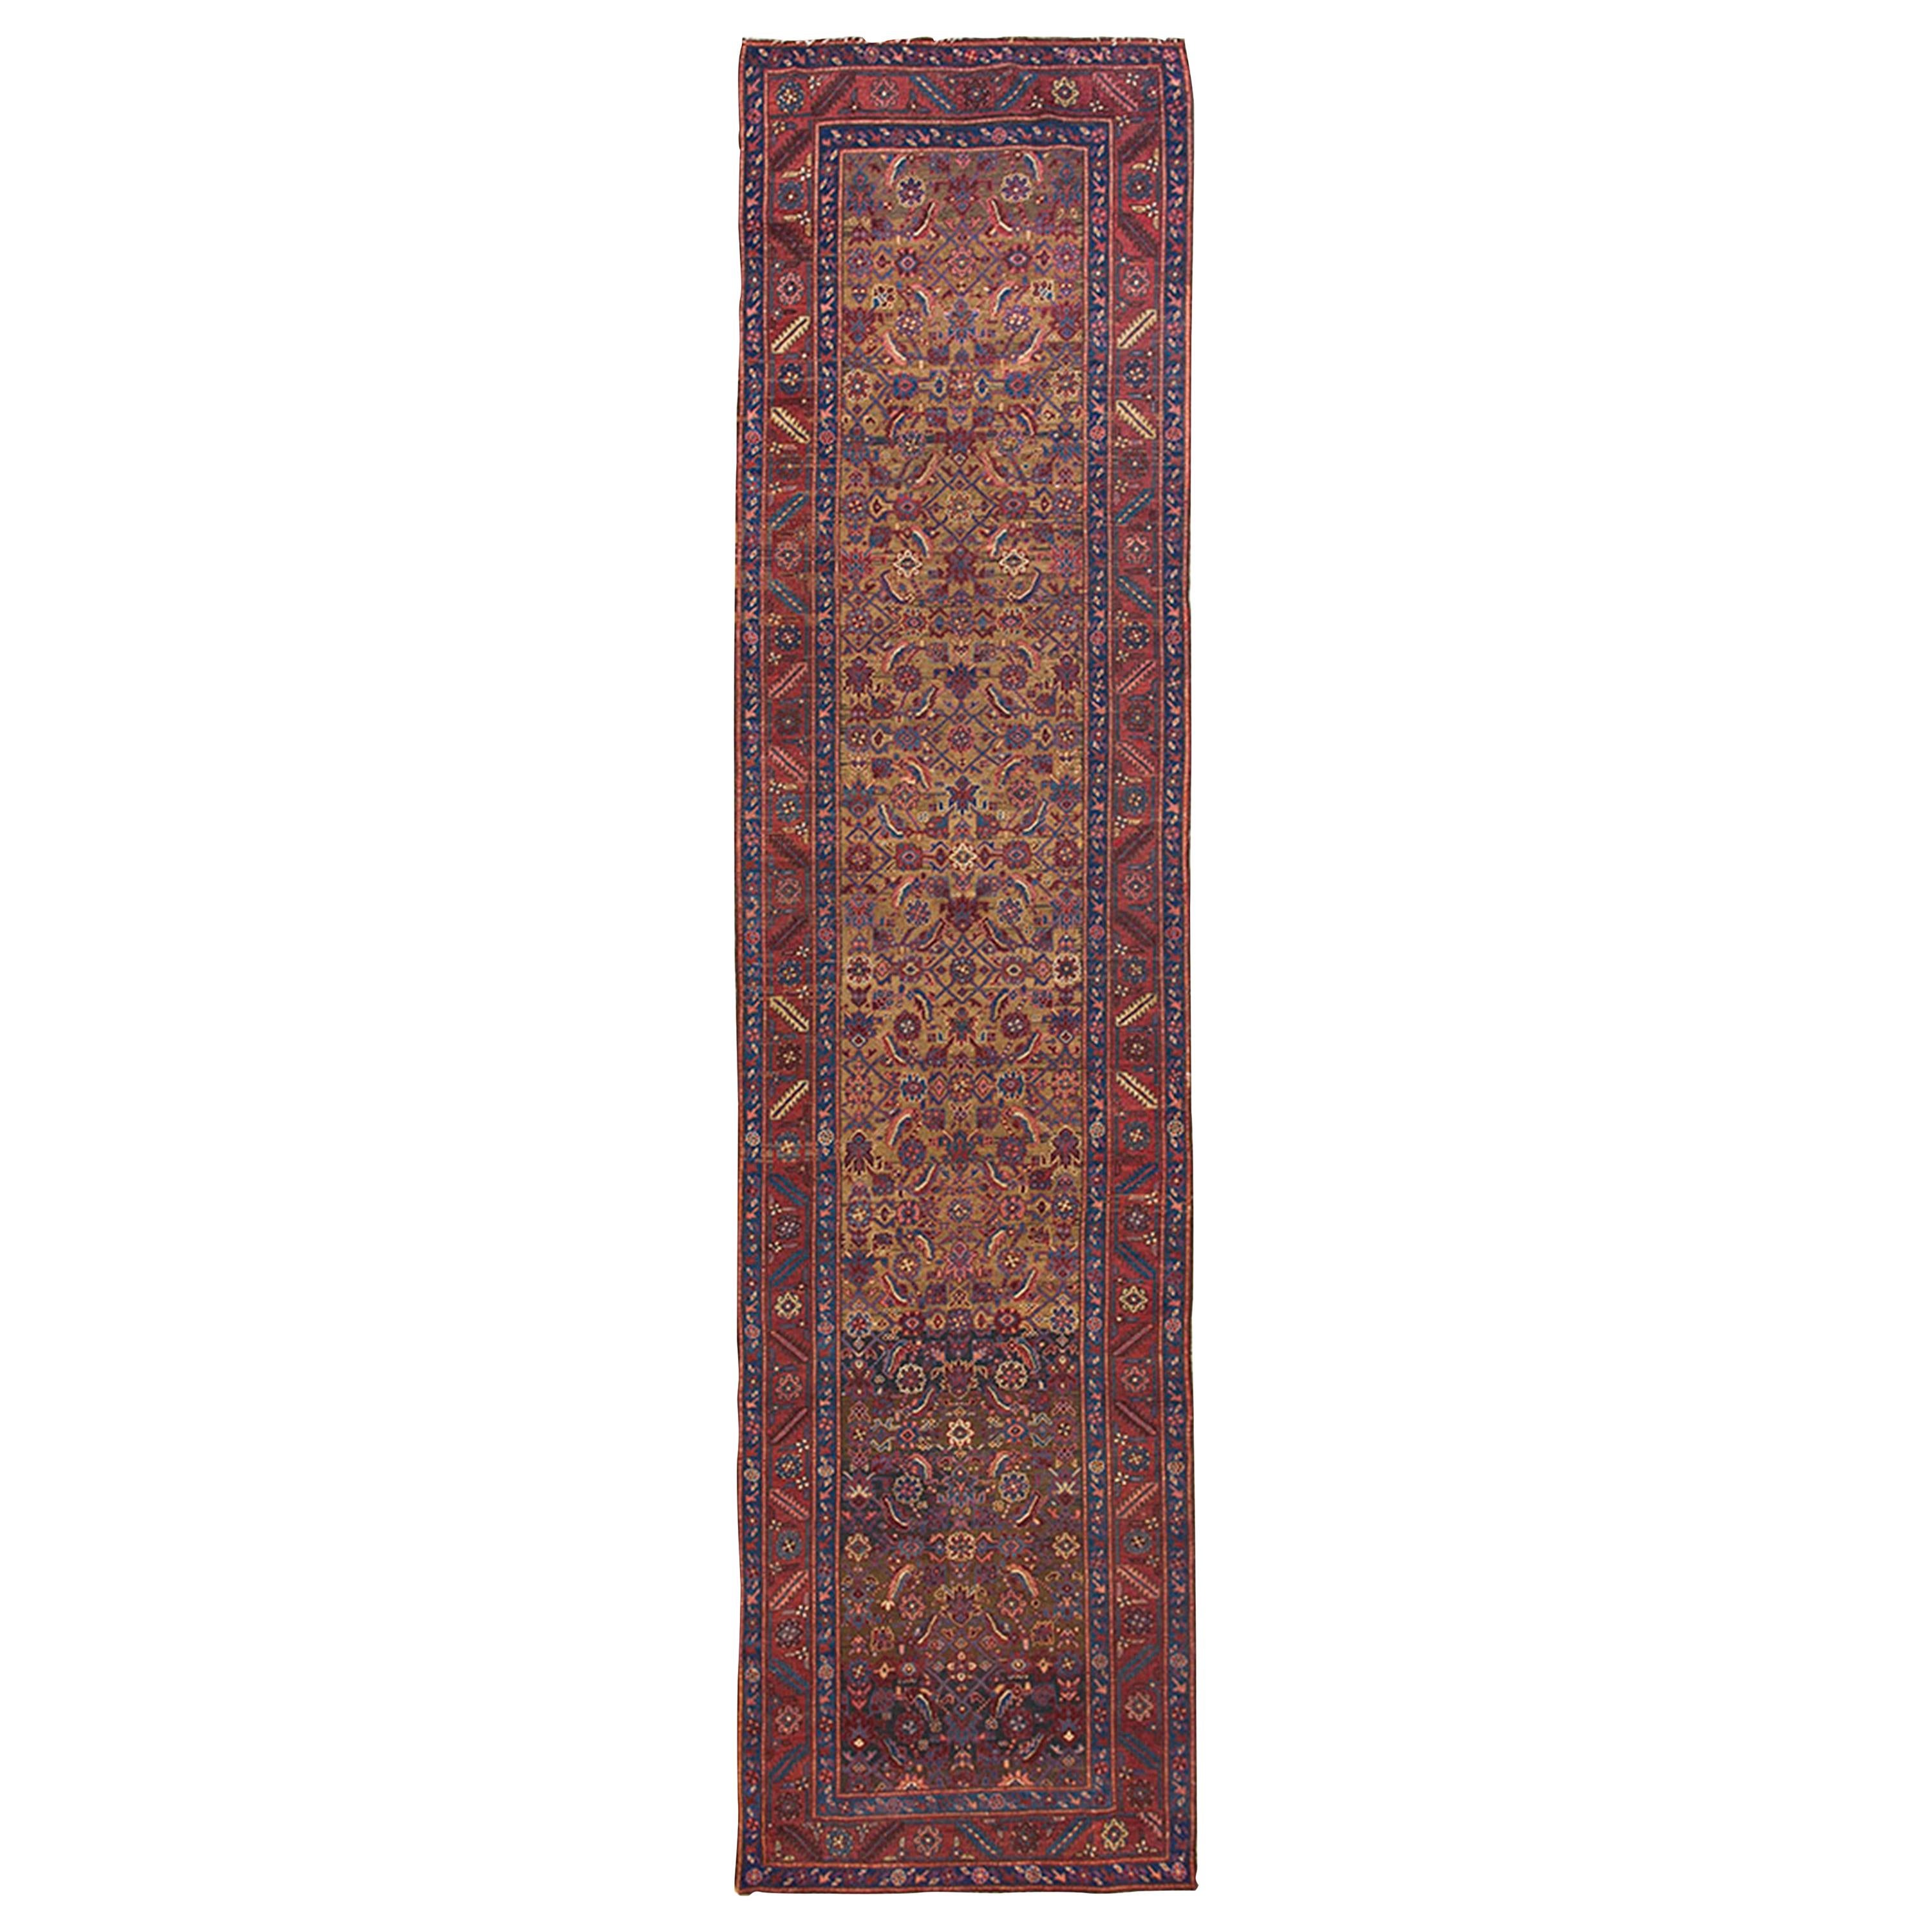 19th Century N.W. Persian Bakshaiesh Runner Carpet ( 3'6" x 14'2" - 107 x 432 )